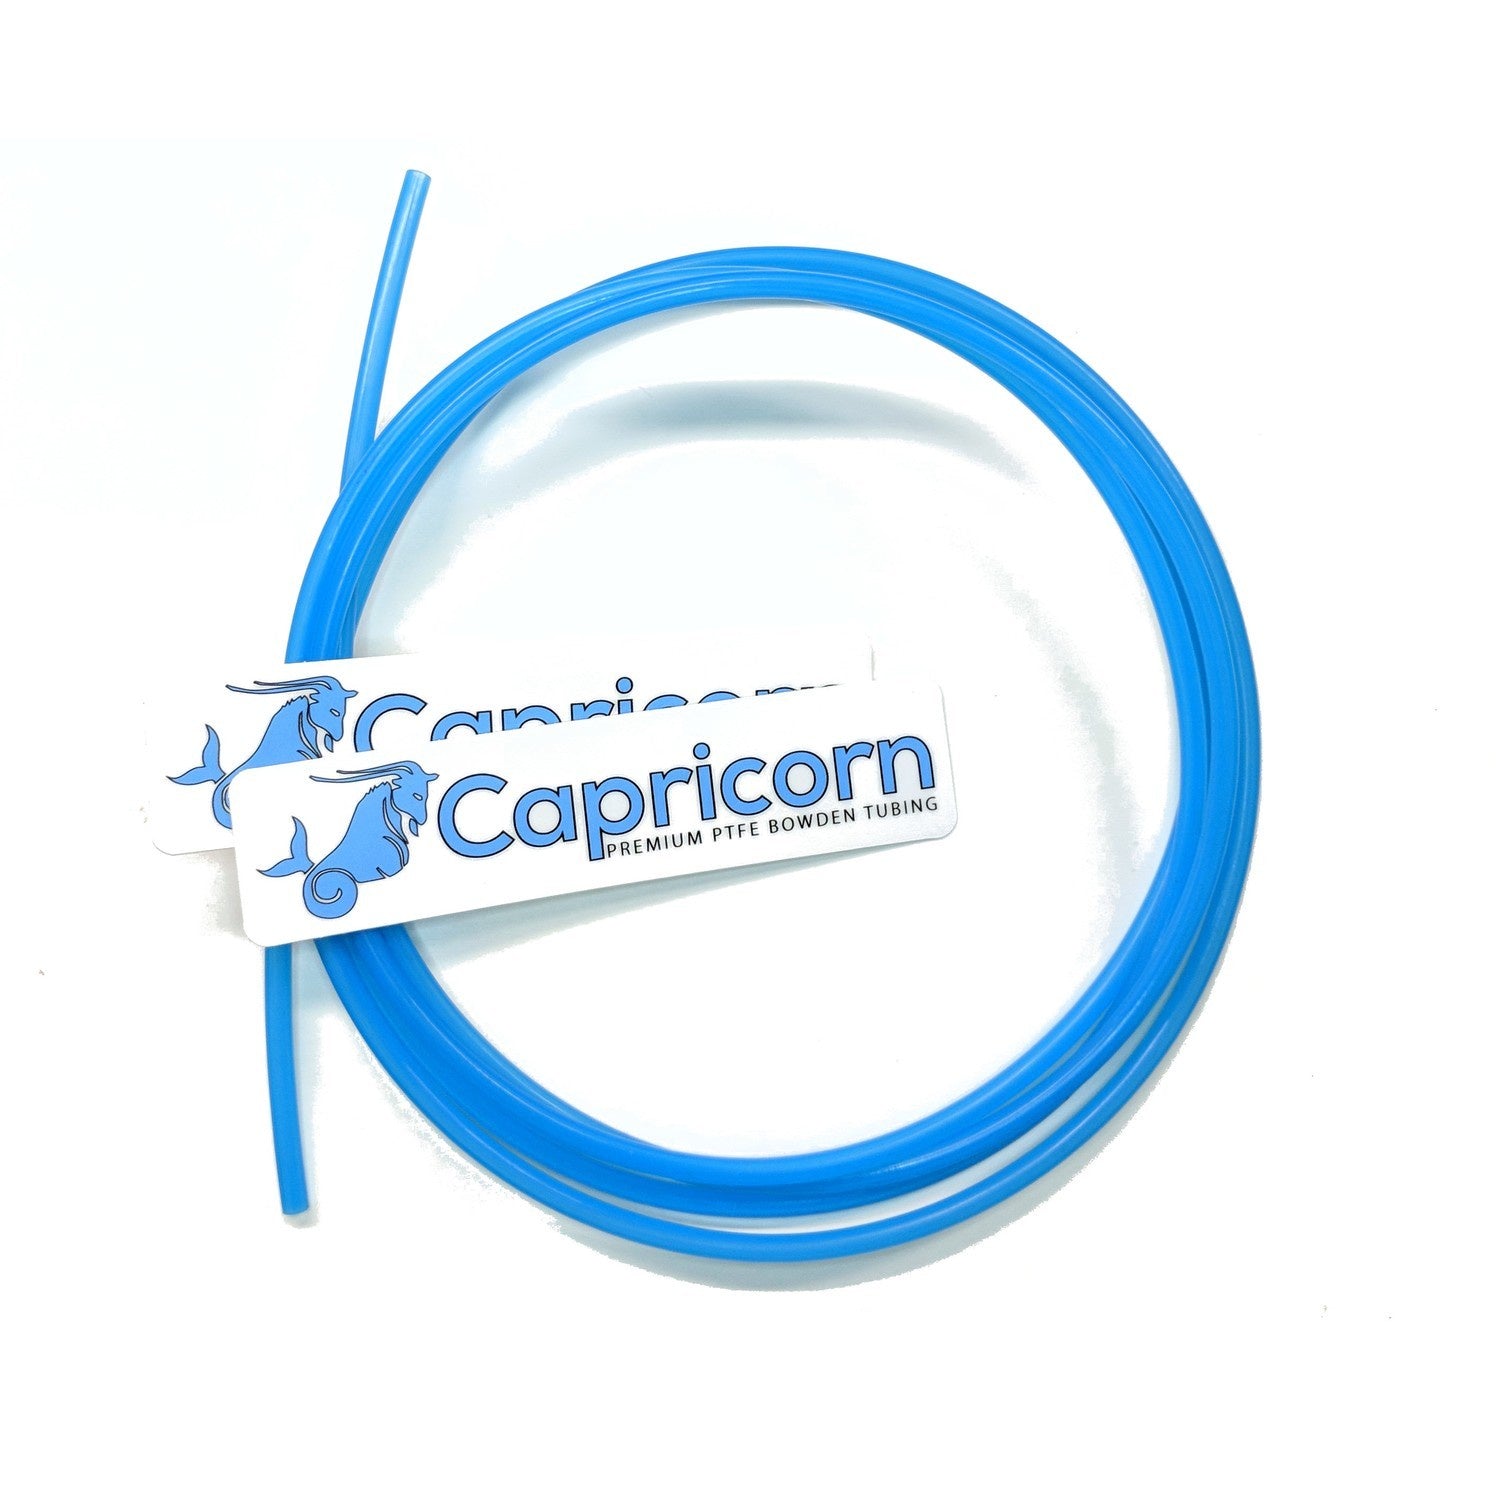 capricorn premium tl bowden tubing 2m